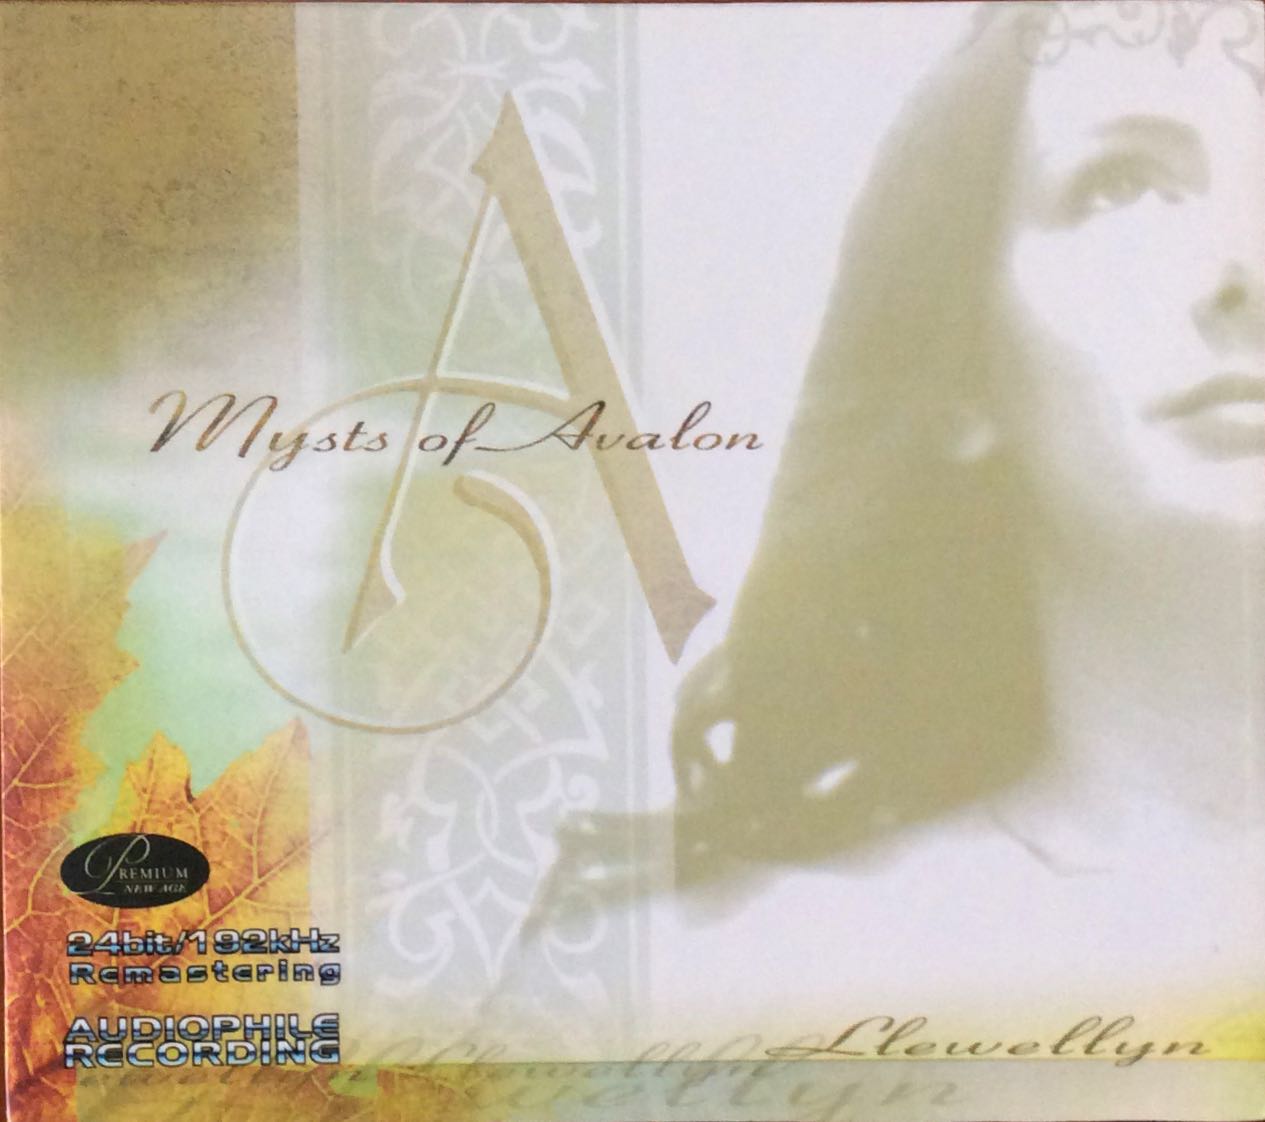 Llewellyn - MYSTS OF AVALON 24bit 192kHz Remastering Audiophile CD